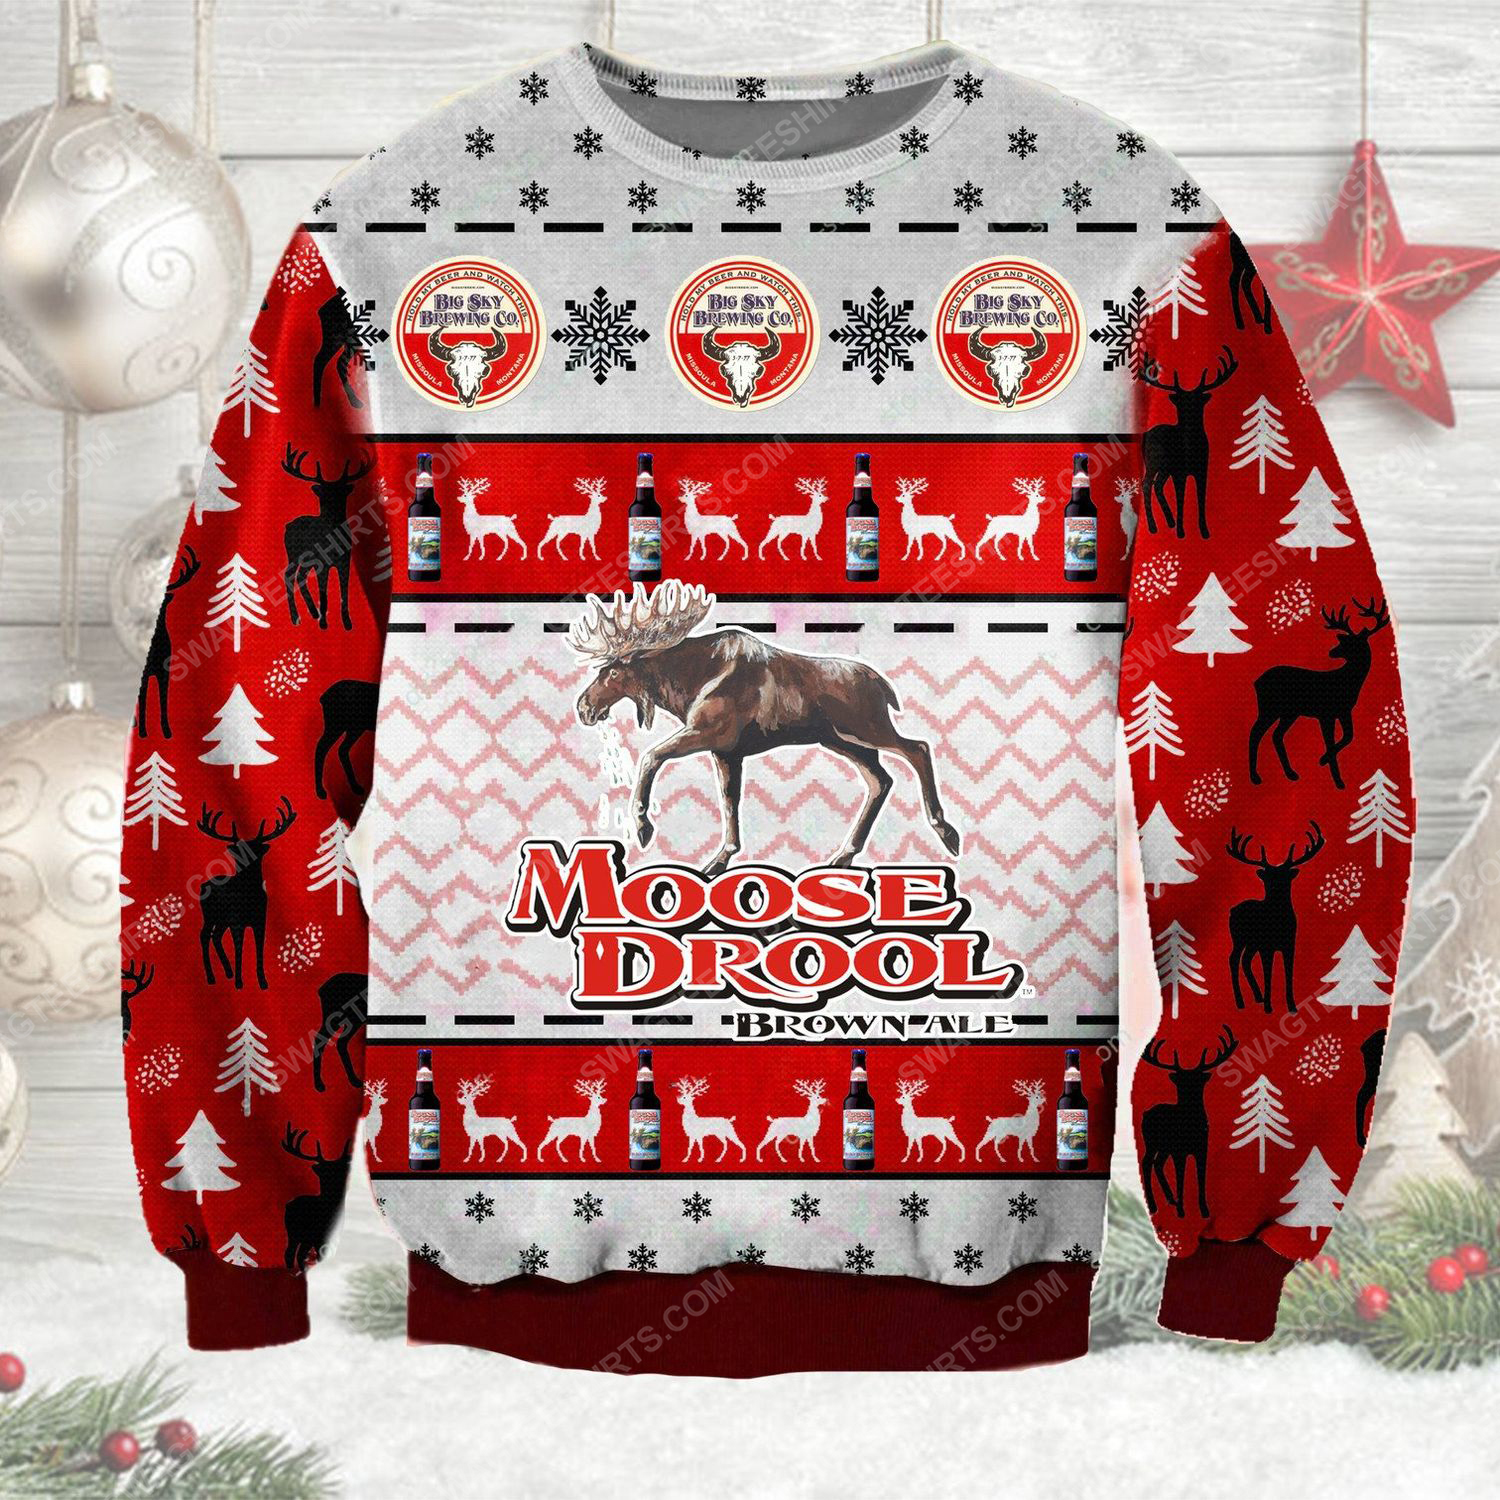 Moose drool big sky brewing ugly christmas sweater